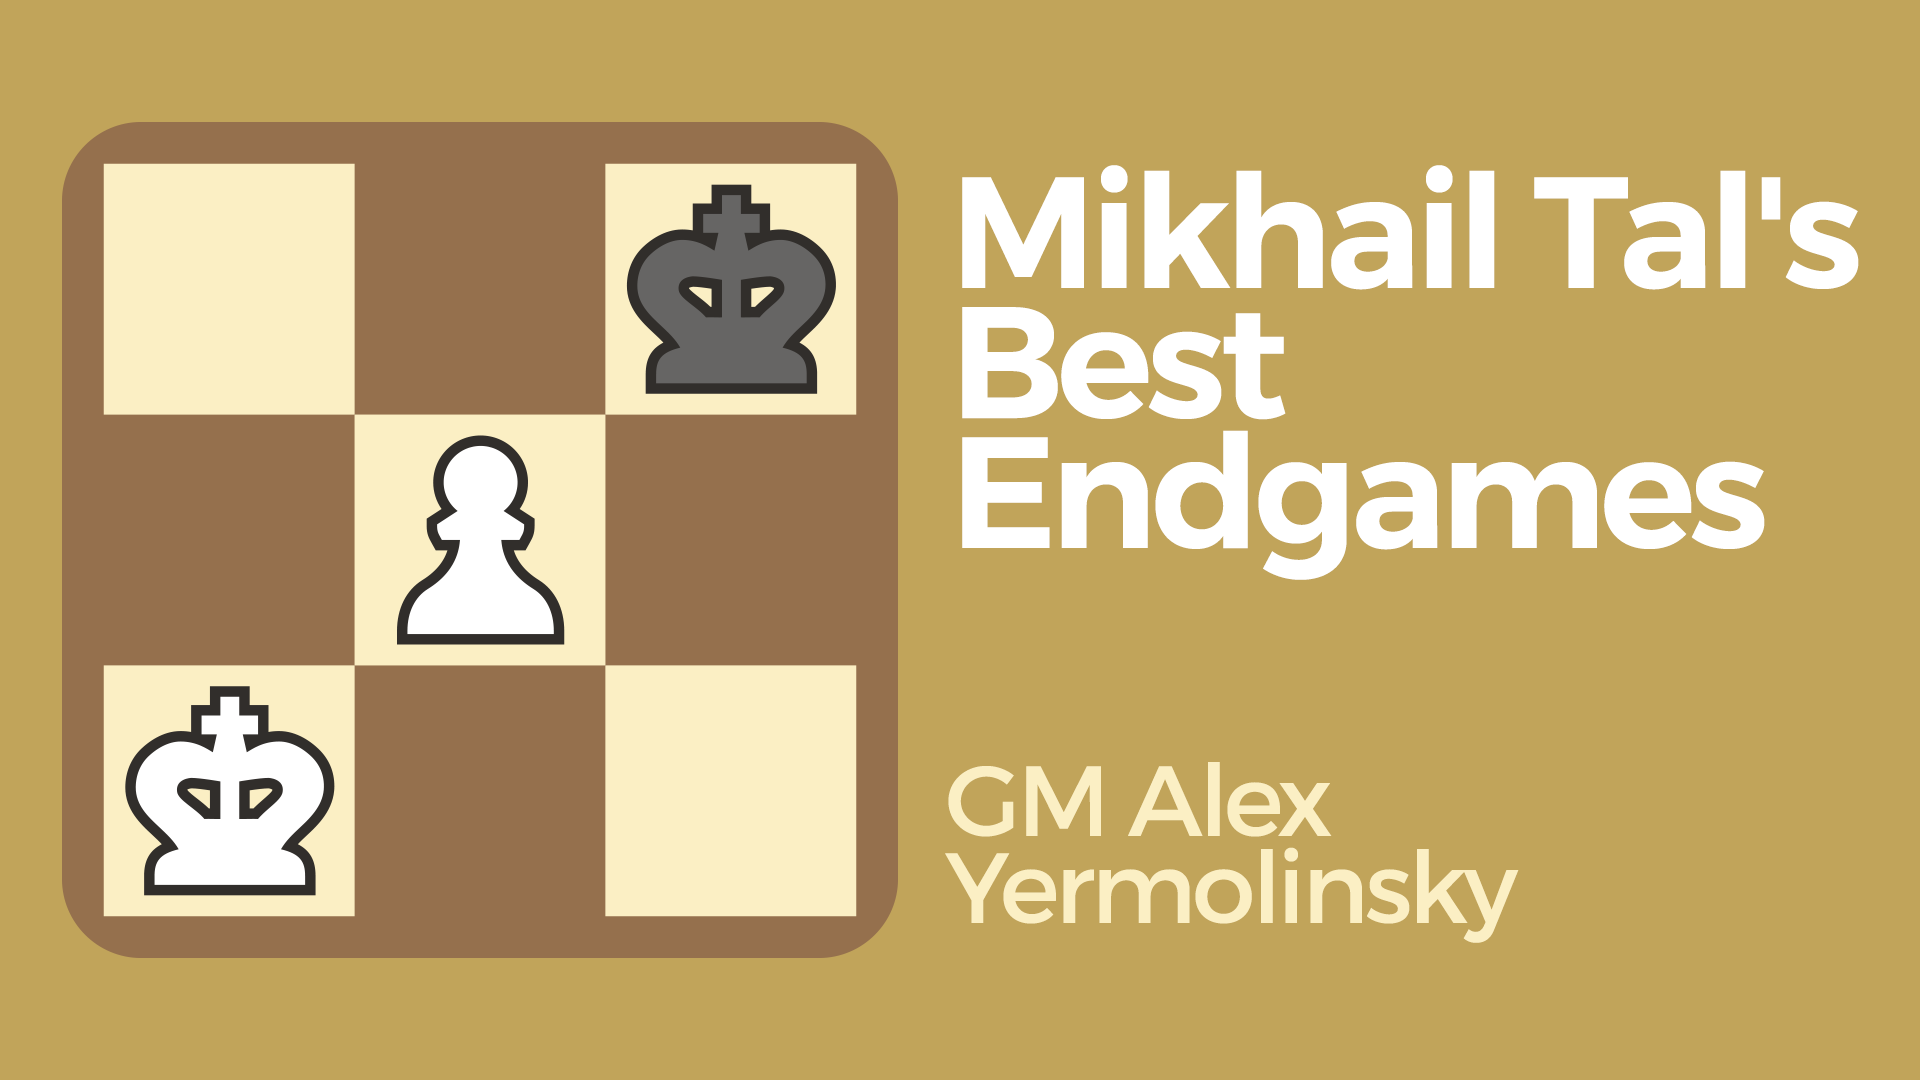 Mikhail Tal's Top 5 Most Brilliant Moves! 